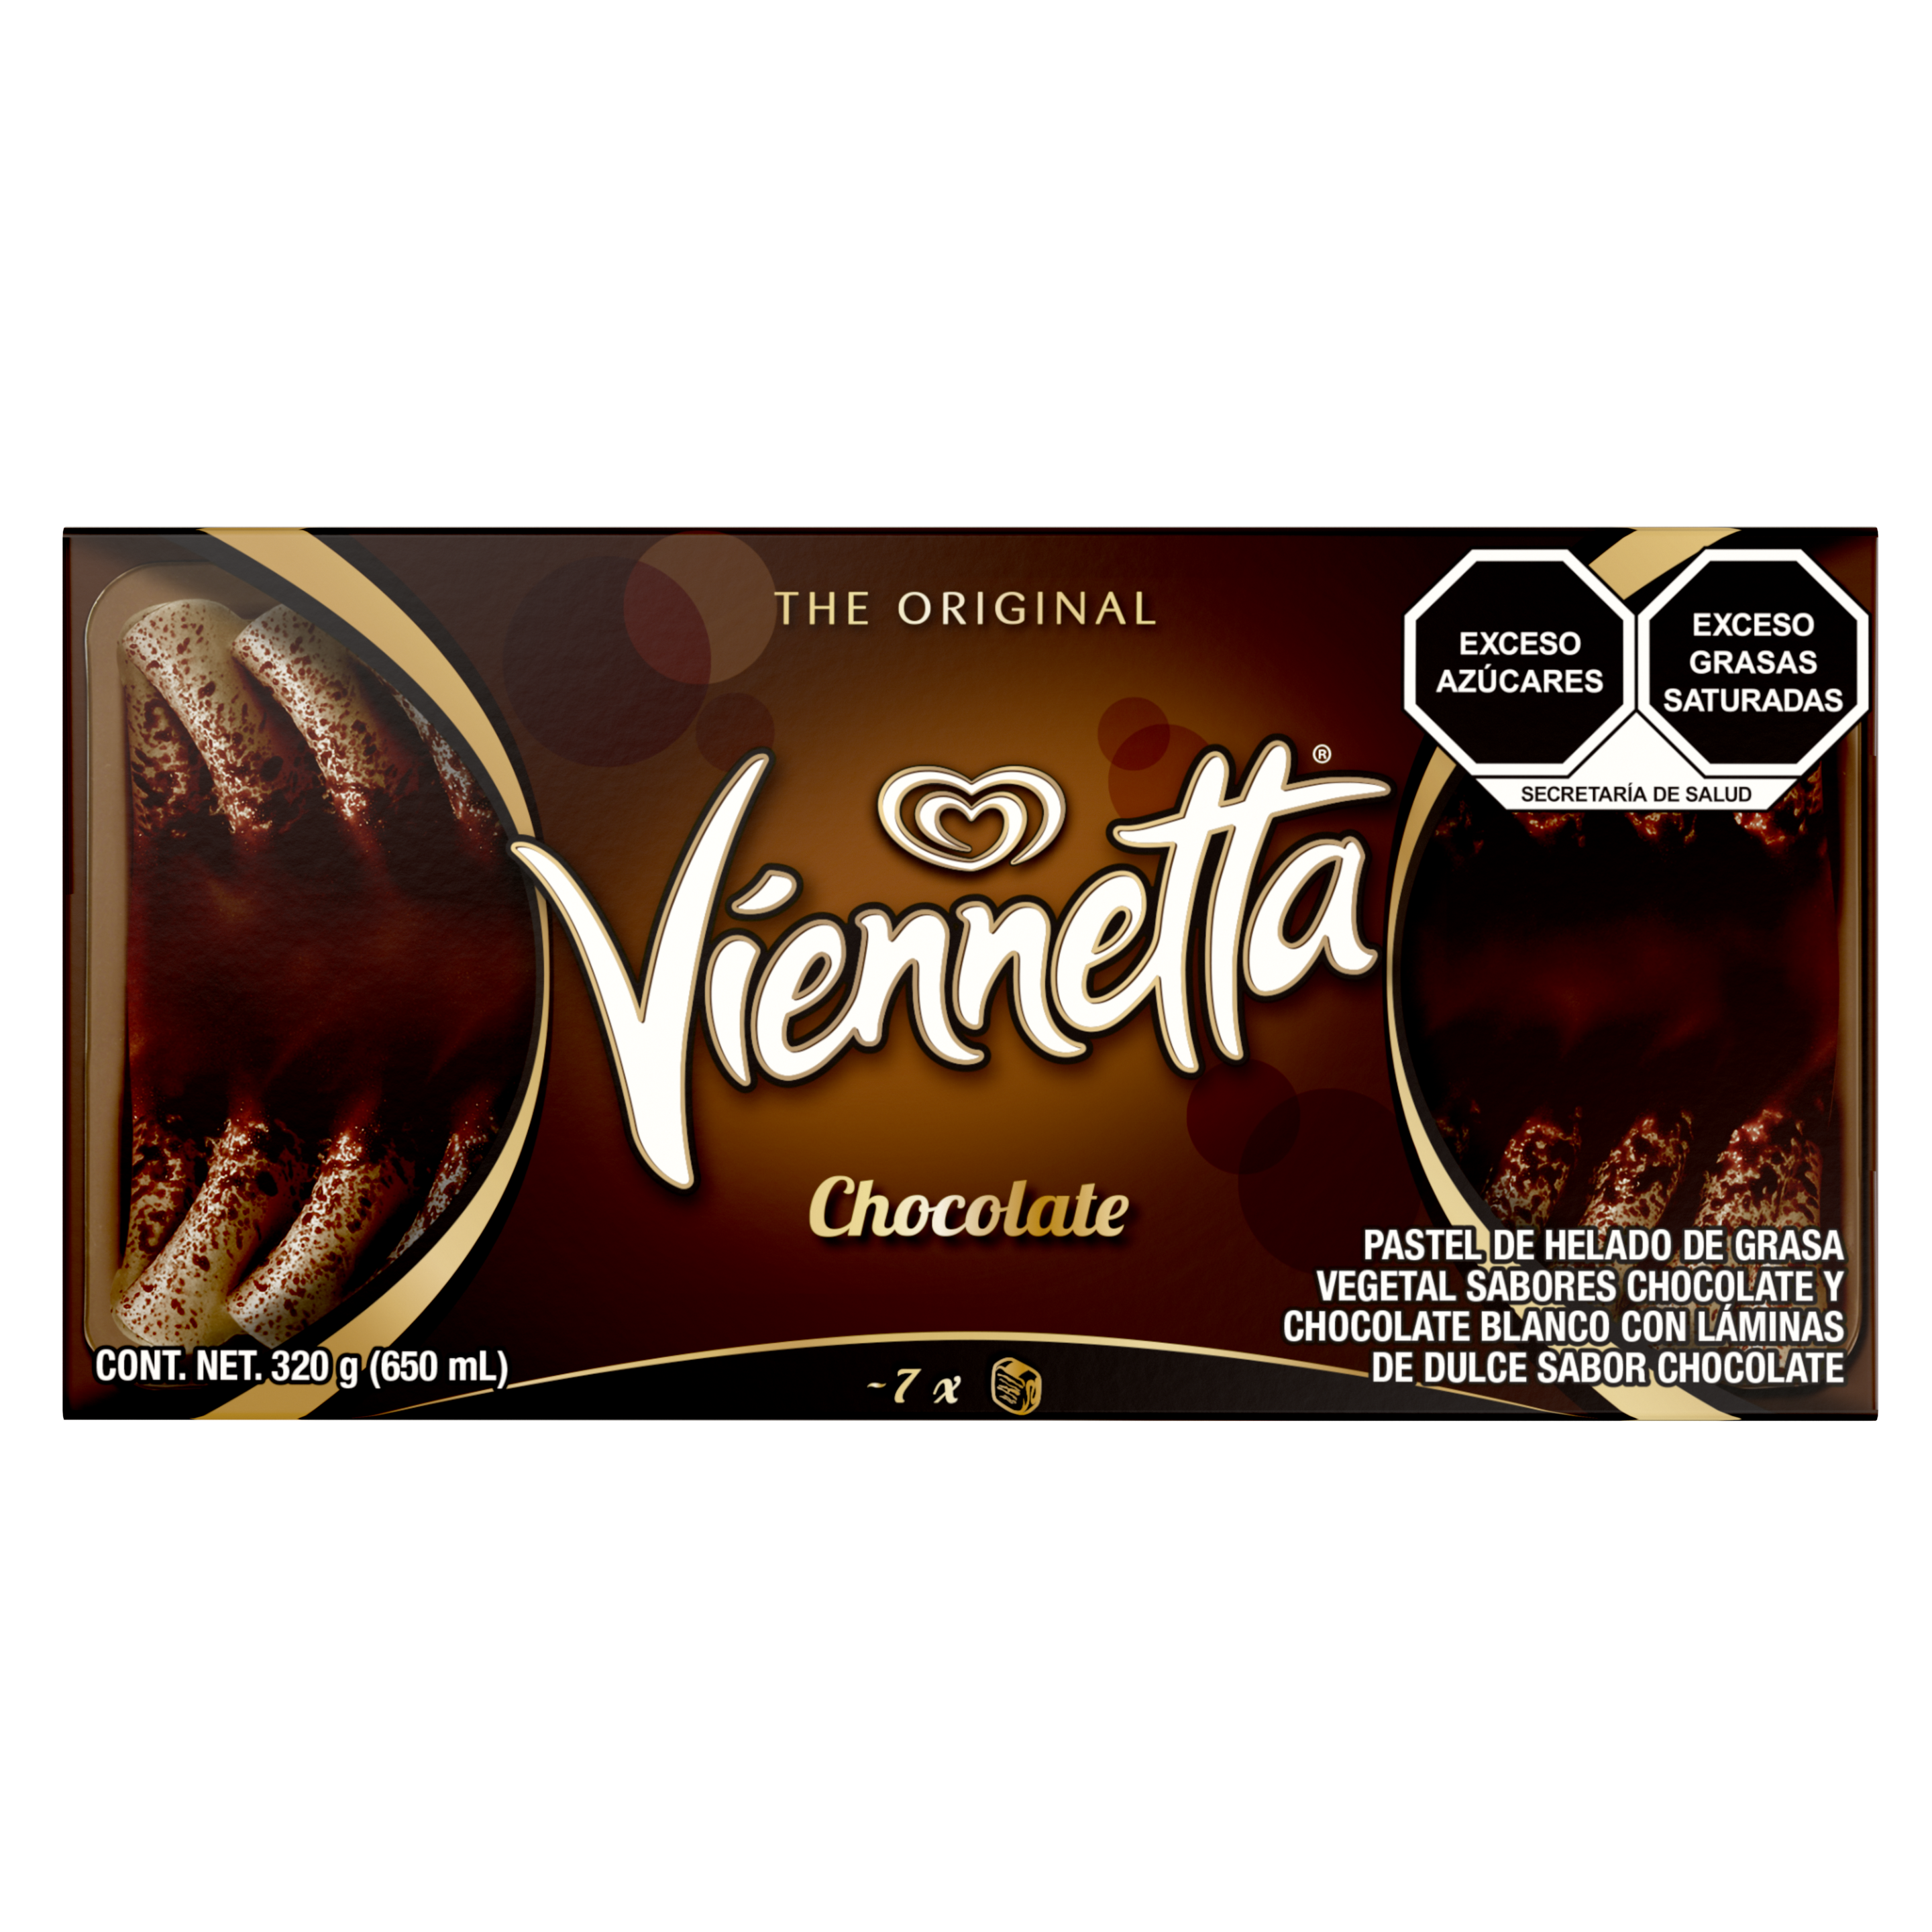 Holanda Viennetta Chocolate